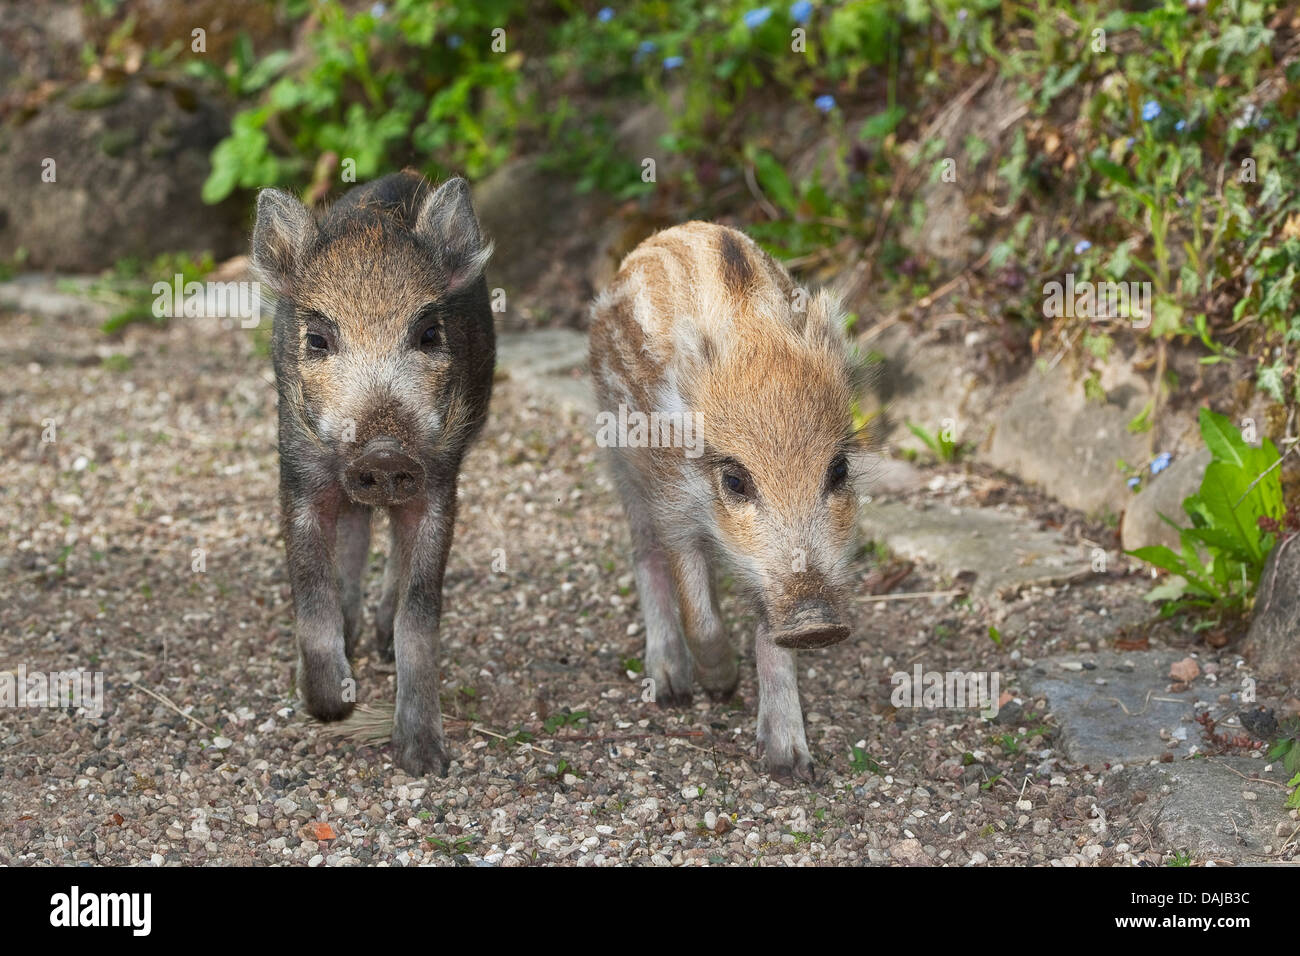 wild boar, pig, wild boar (Sus scrofa), two shotes walking side by side on a path, Germany Stock Photo